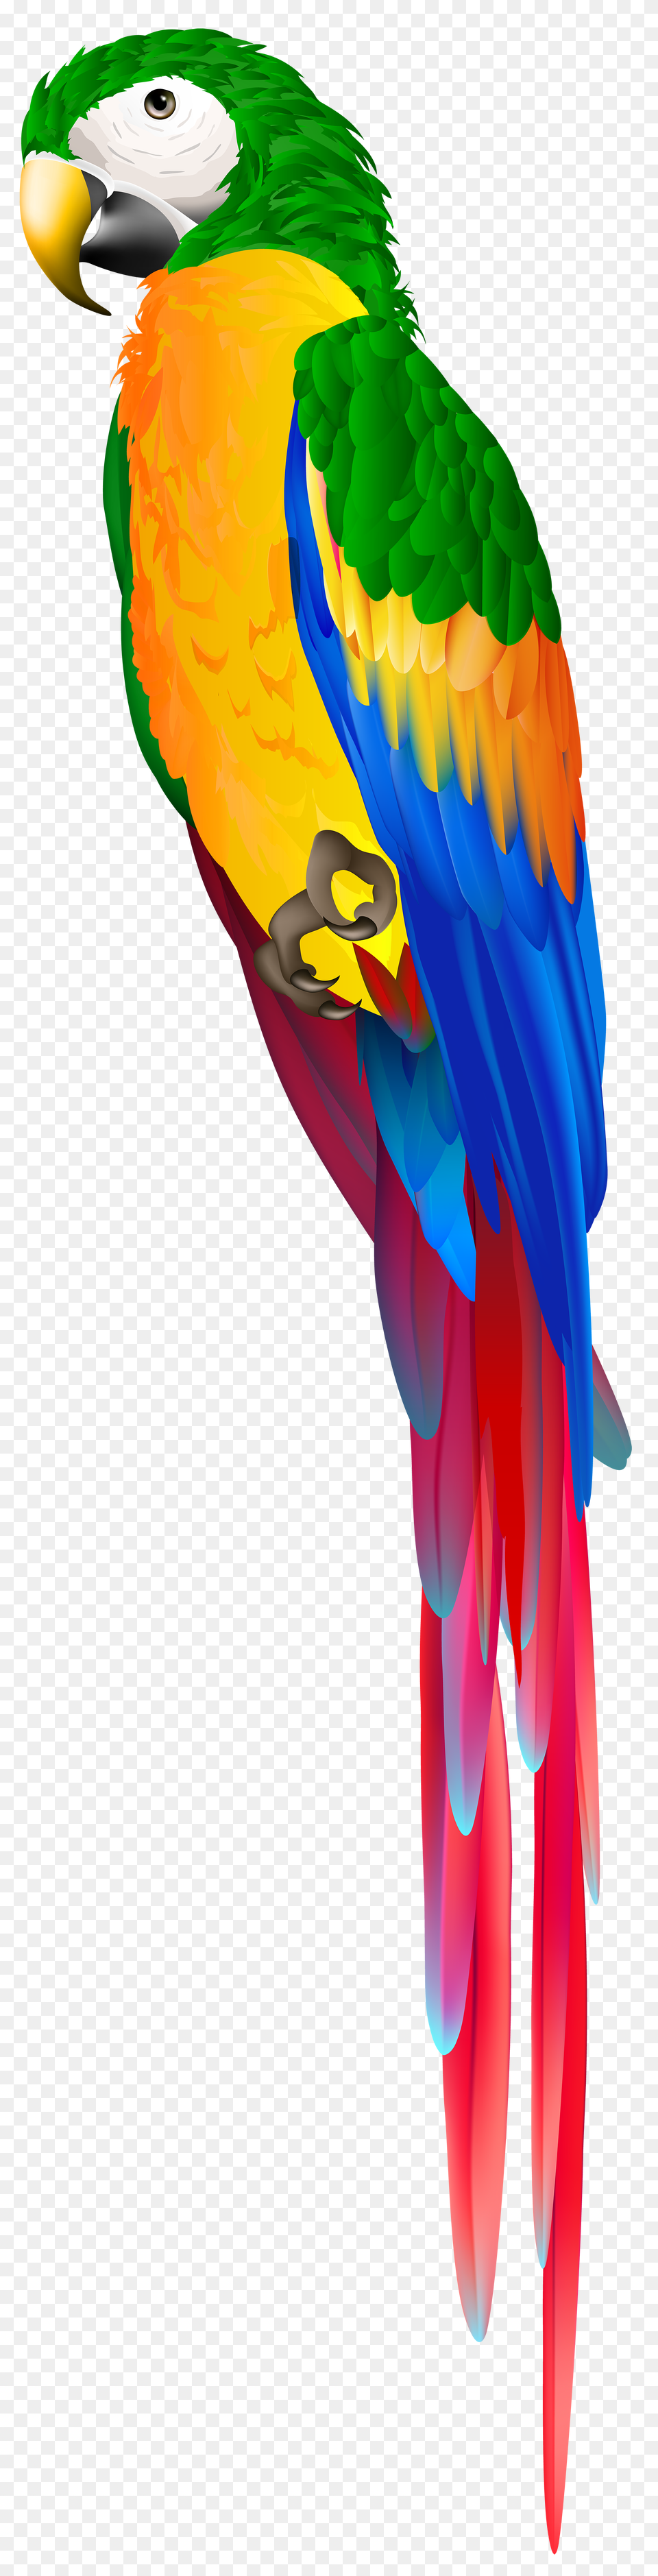 Parrot Green Clip Art Imageu200b Gallery Yopriceville, Animal, Bird, Macaw, Wedding Png Image